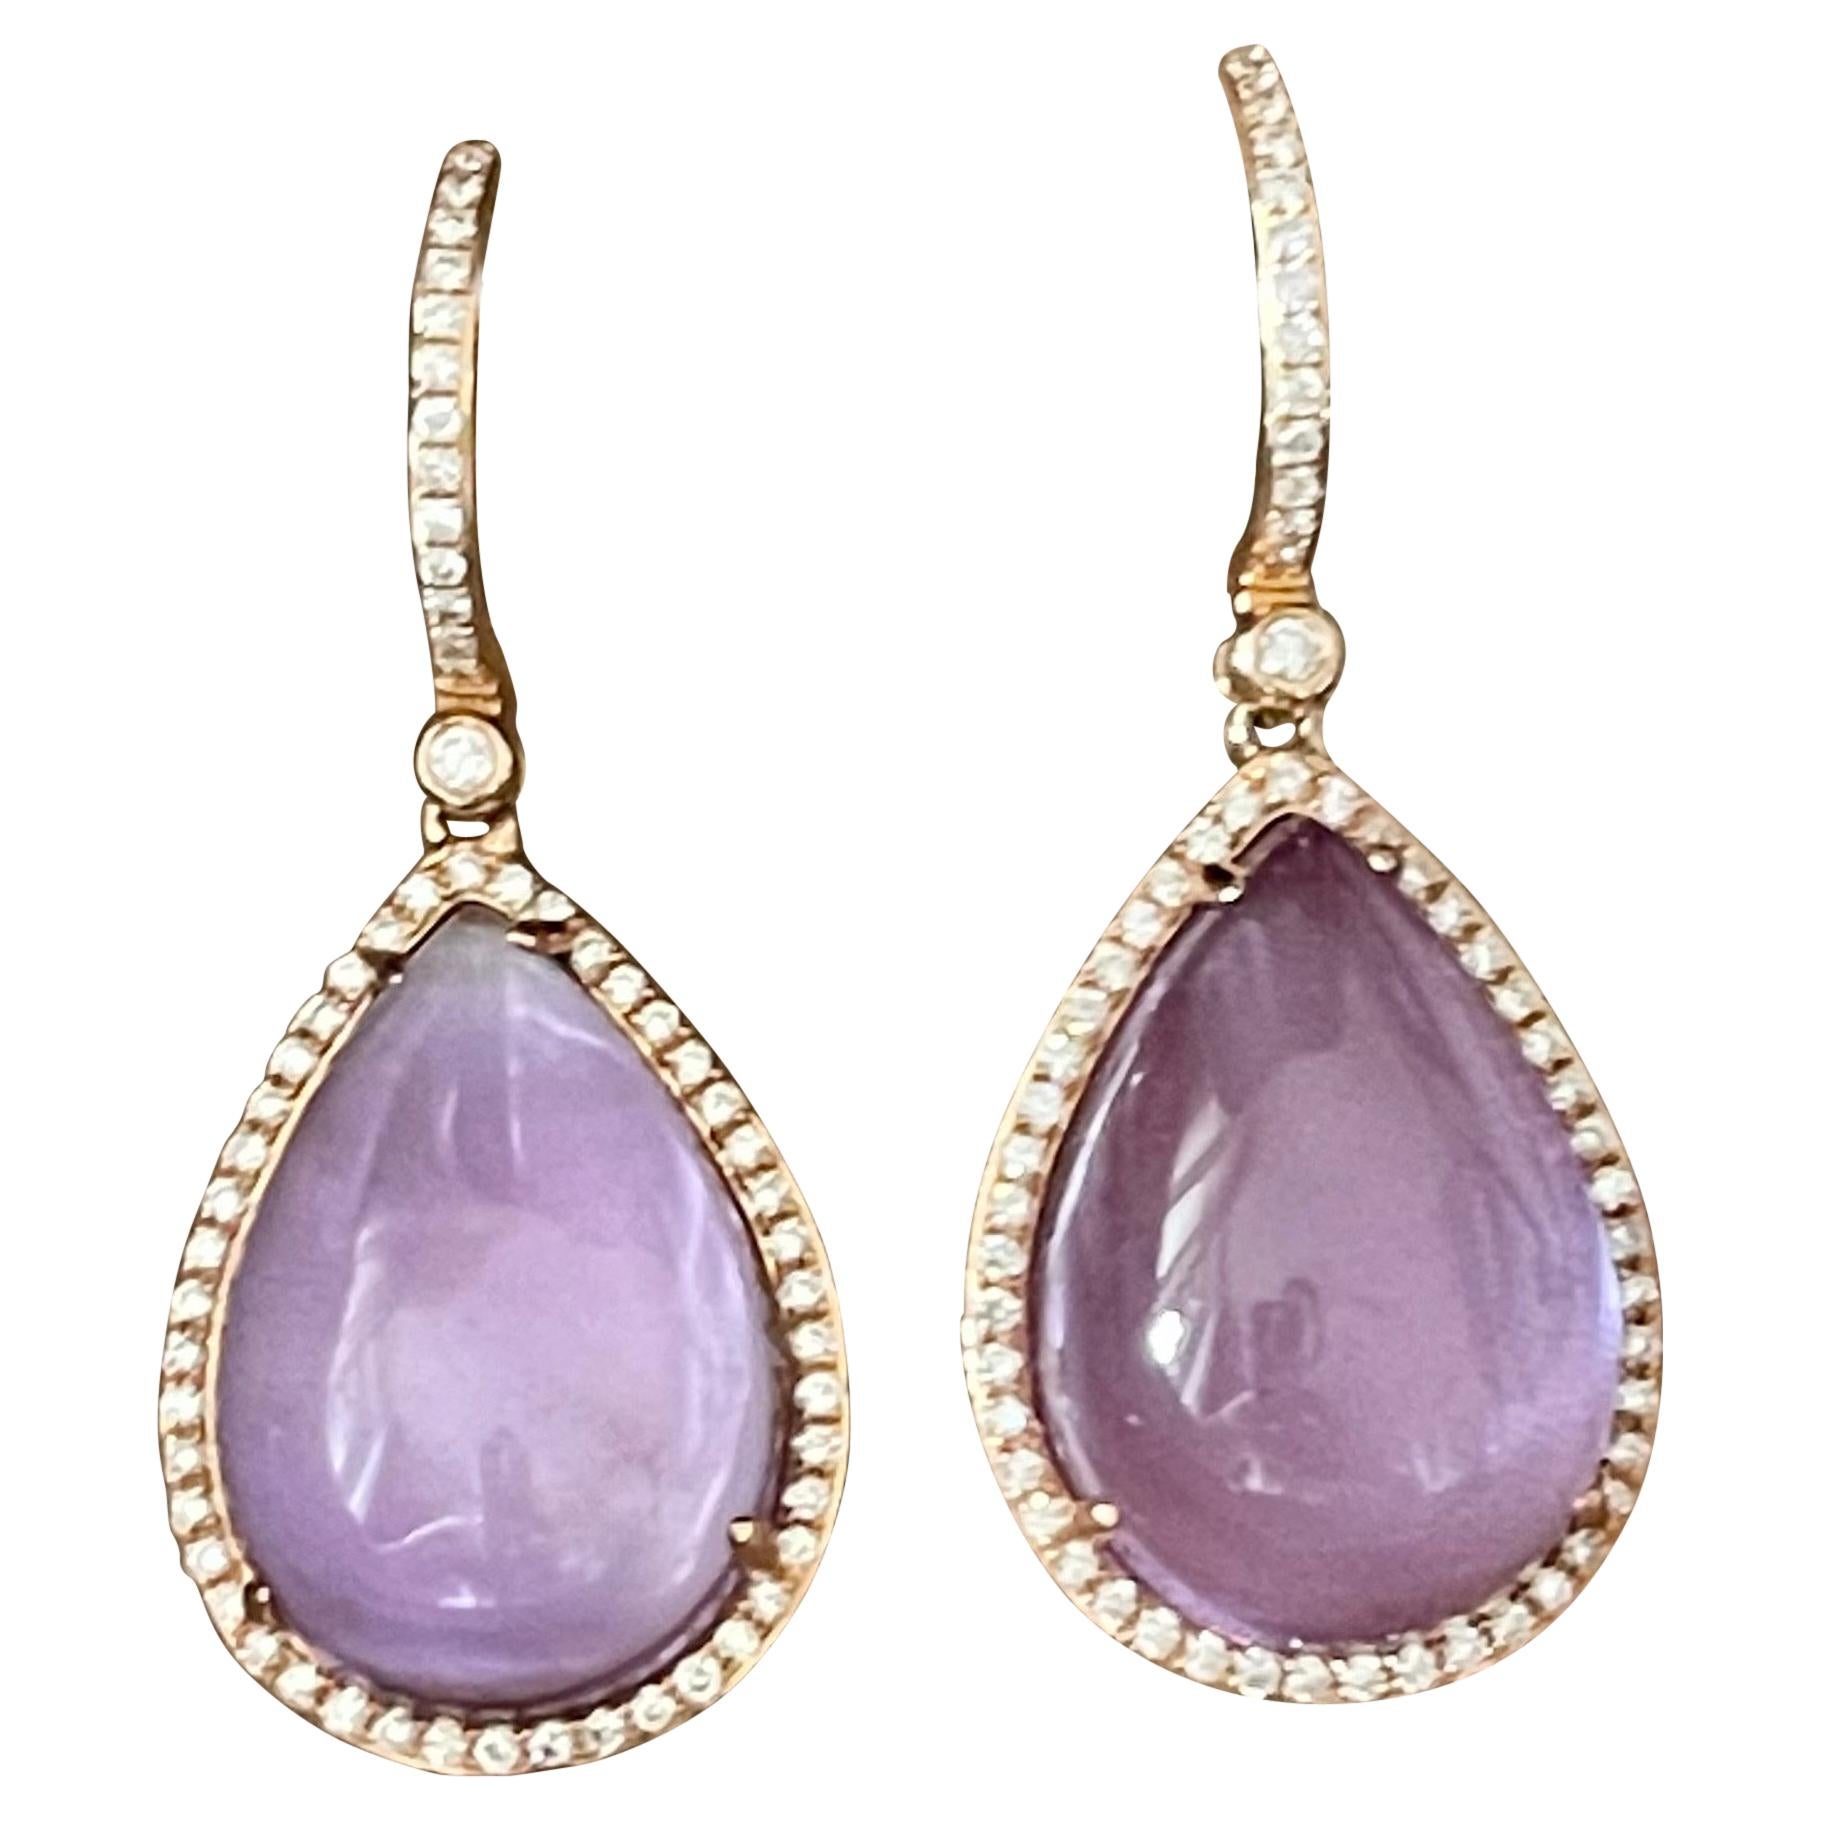 Pair of 18 K Rose Gold Earrings Diamonds Mother of Pearl Amethyst